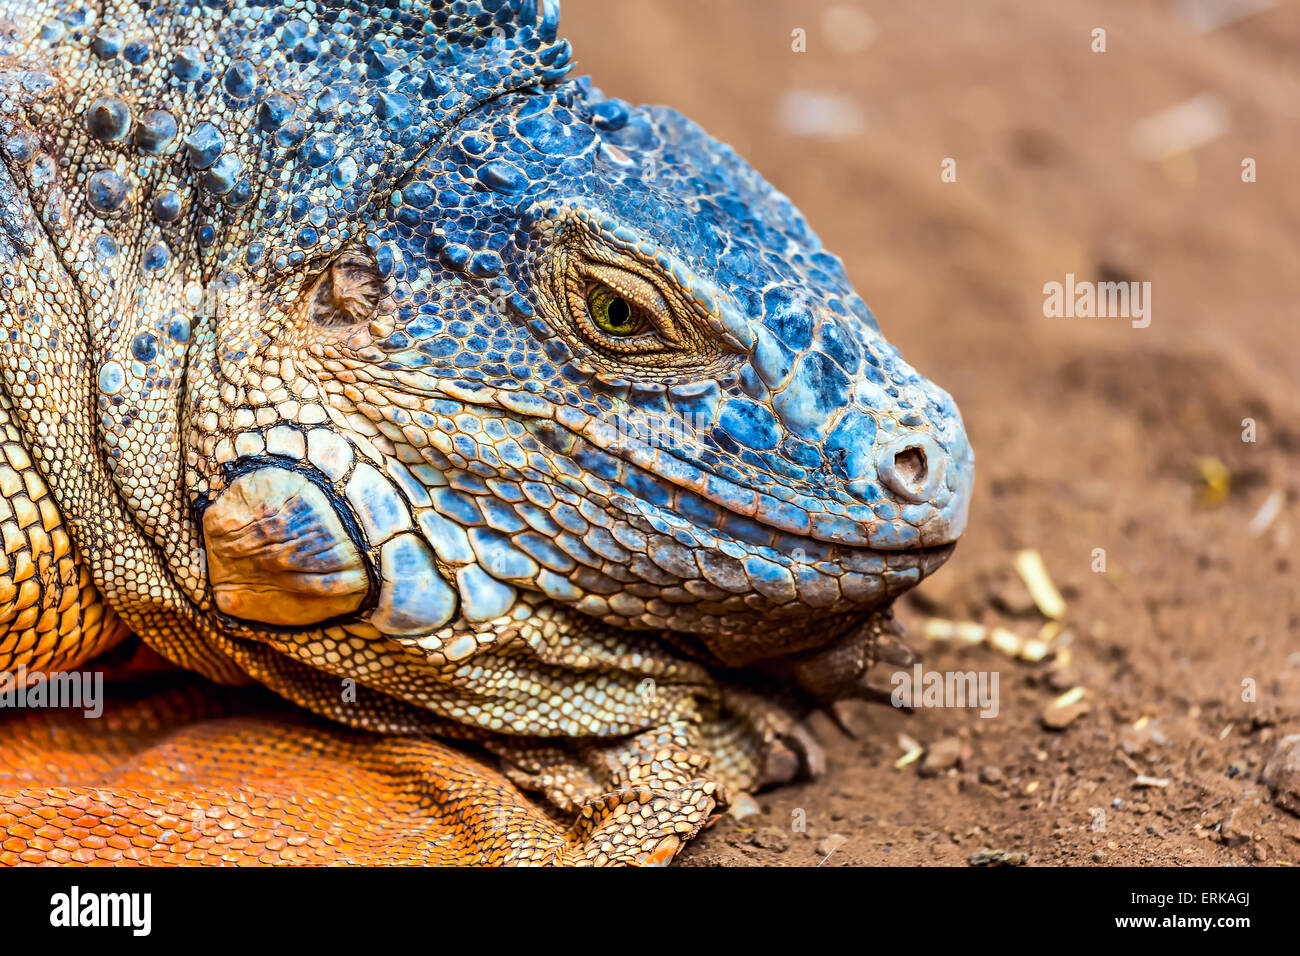 Closeup of iguana or lizard head on yellow sand in desert Stock Photo